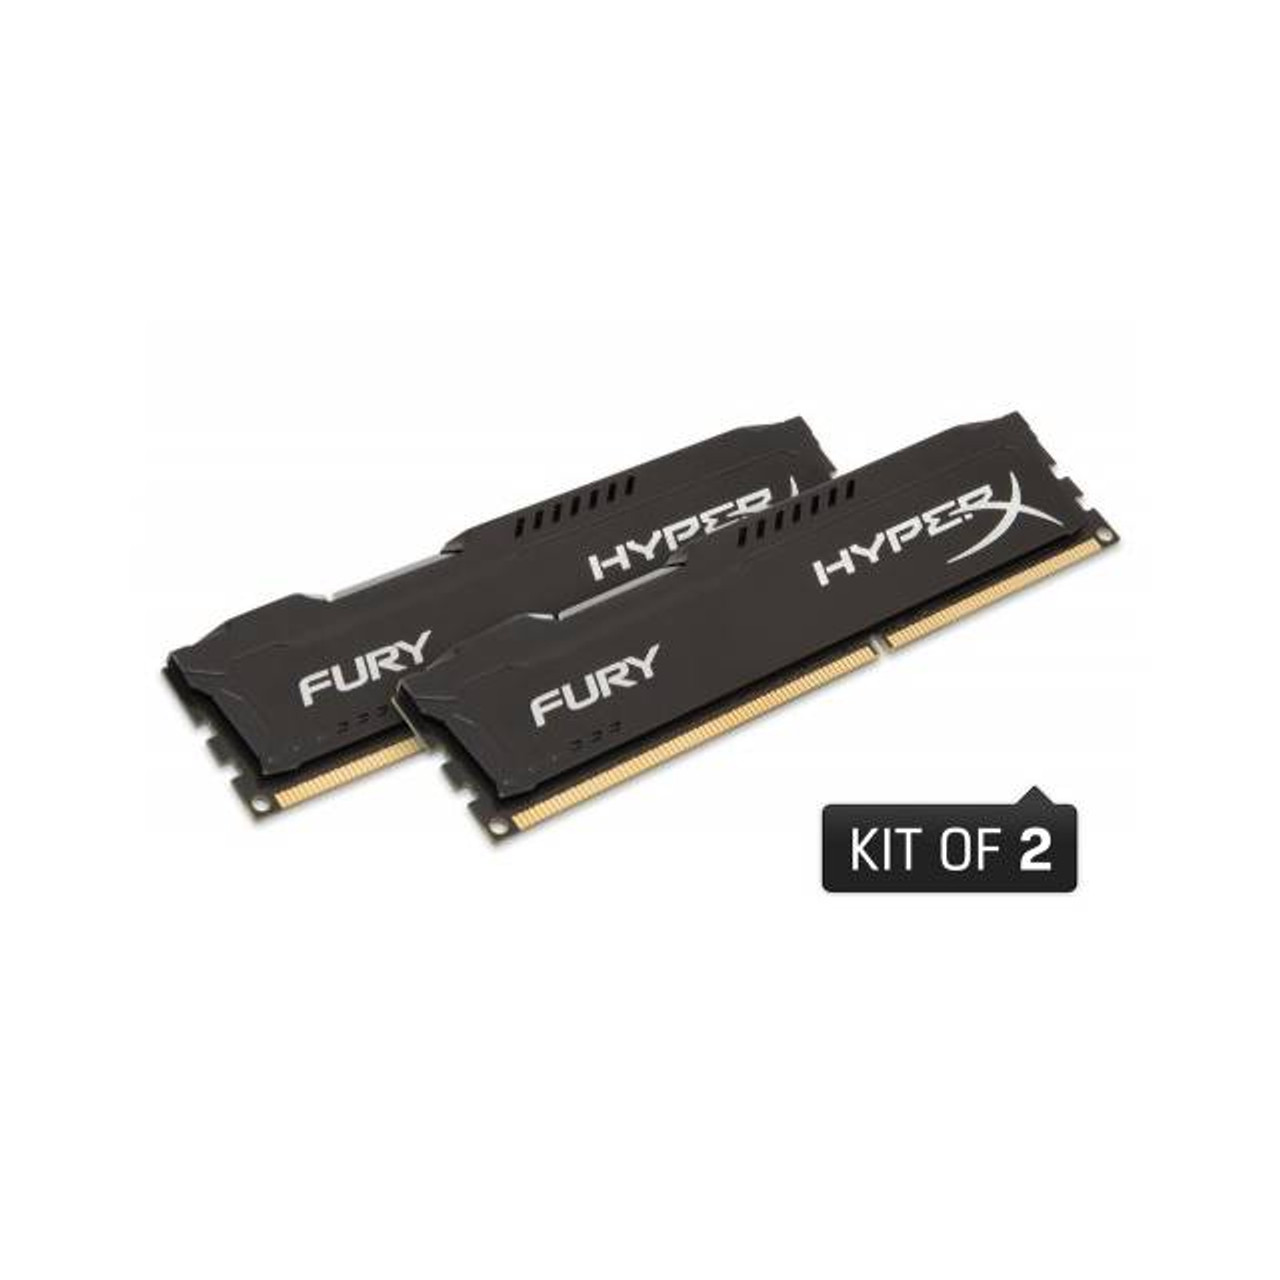 Kingston HyperX FURY Black HX316C10FBK2/16 DDR3-1600 16GB(2x8GB)/1Gx64 CL10 Memory Kit